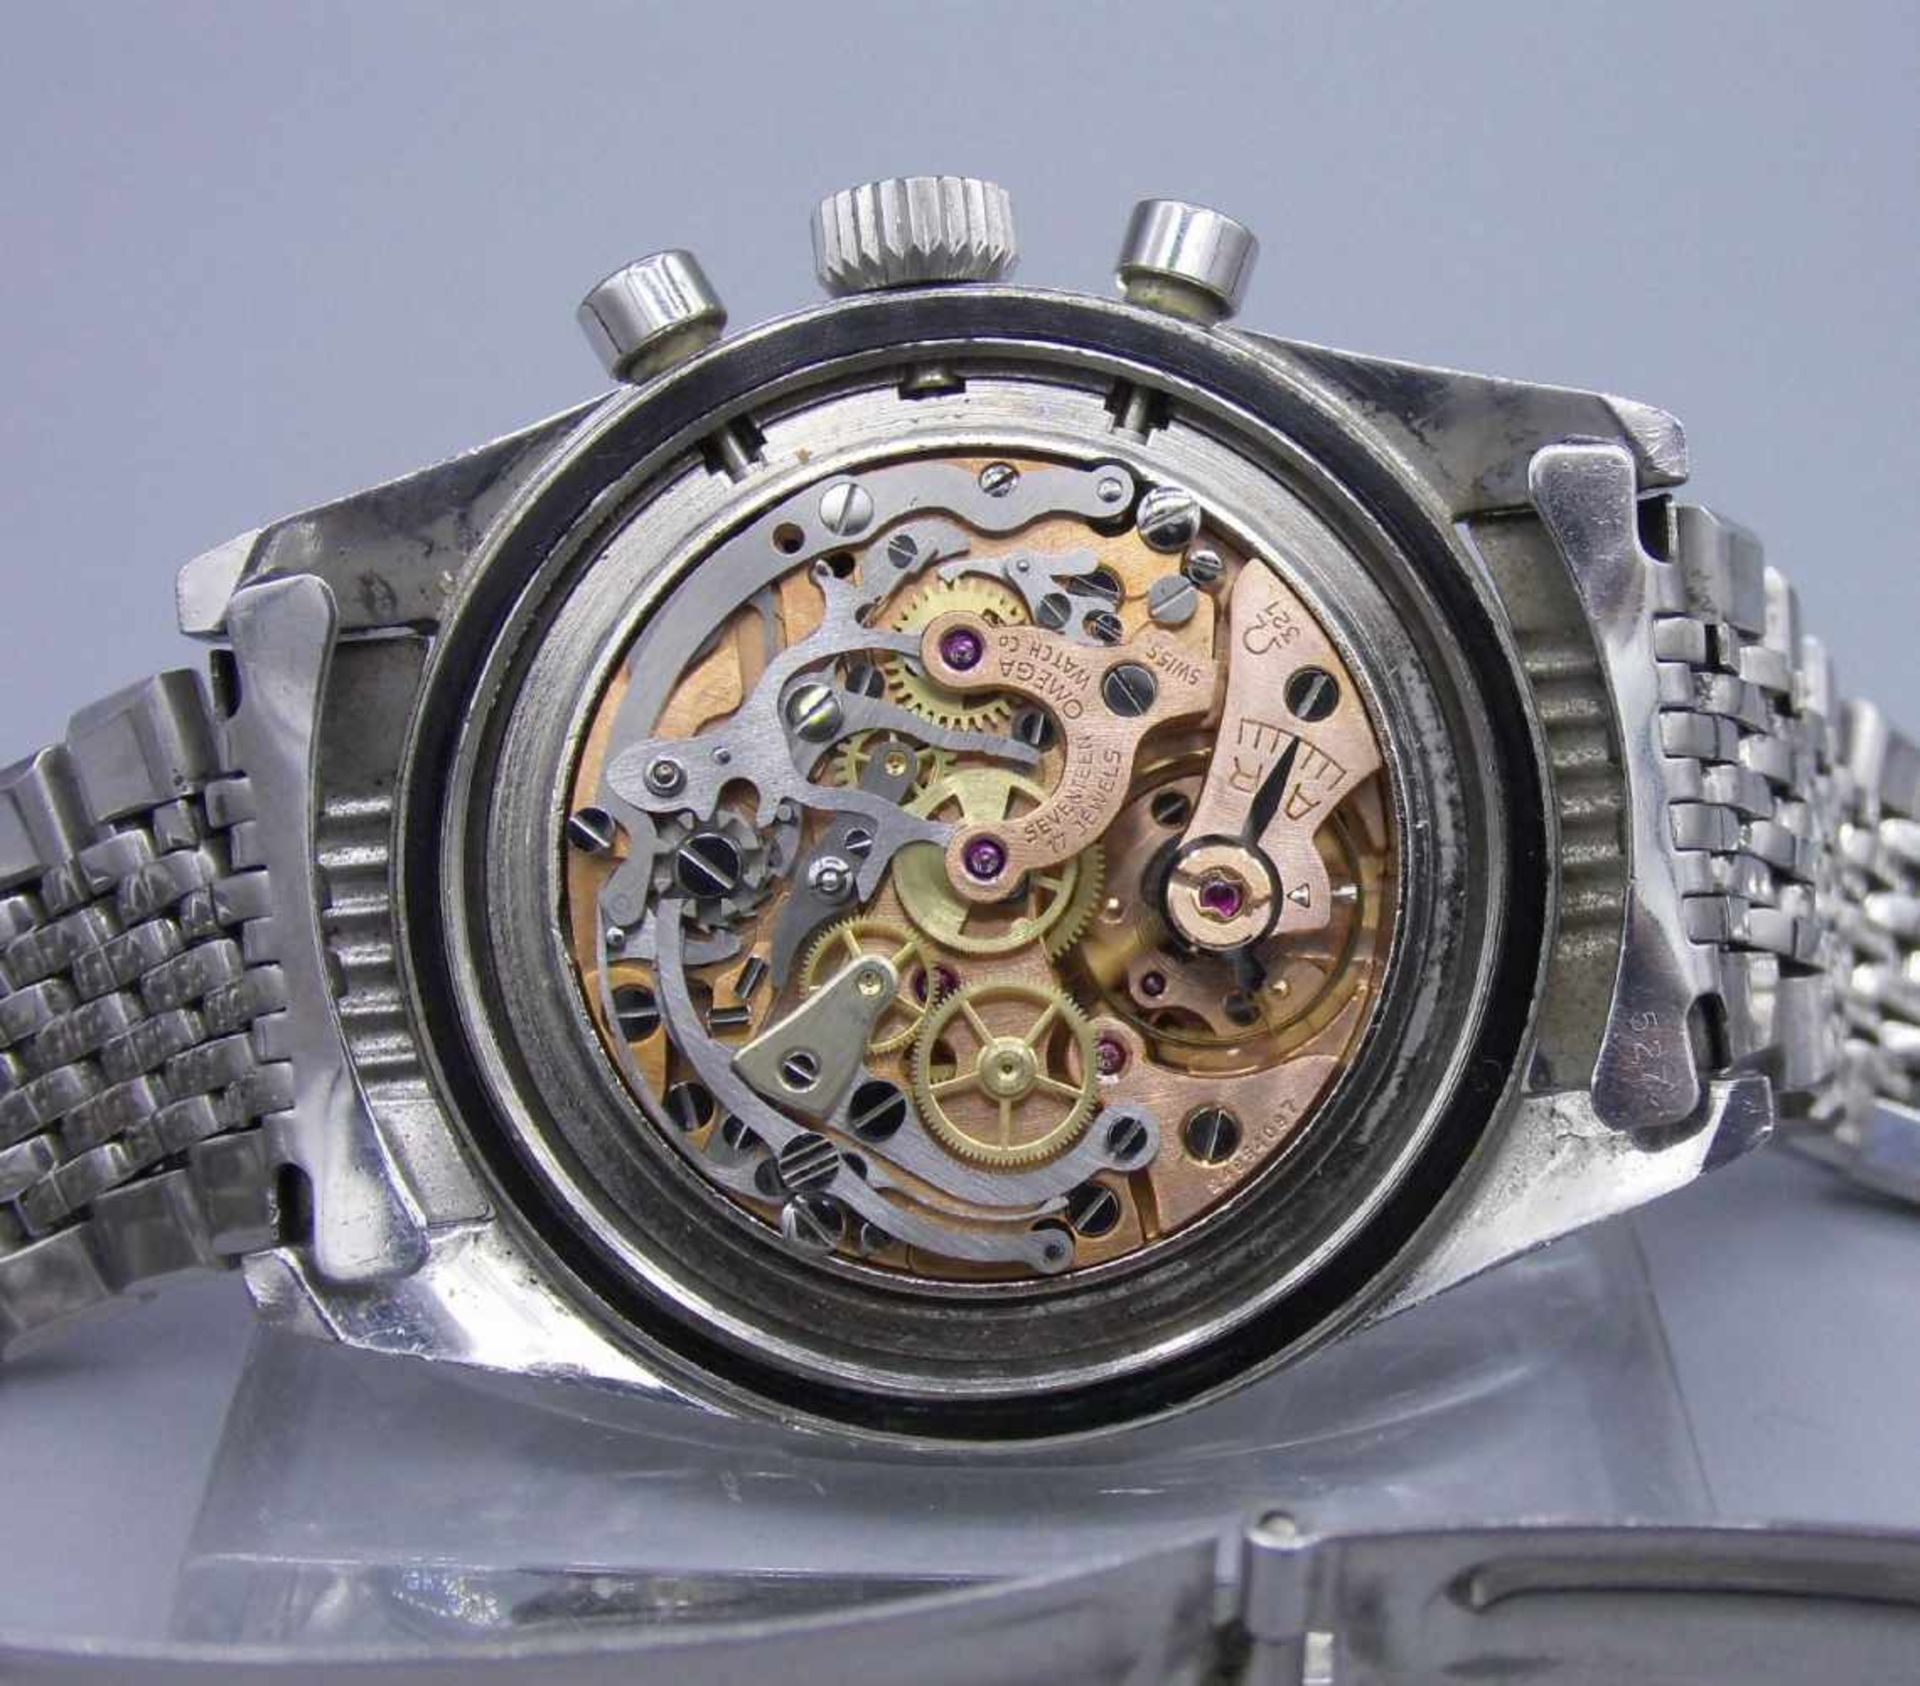 VINTAGE ARMBANDUHR / CHRONOGRAPH - Omega Speedmaster / wristwatch, Handaufzug, 1960er Jahre ( - Image 4 of 13